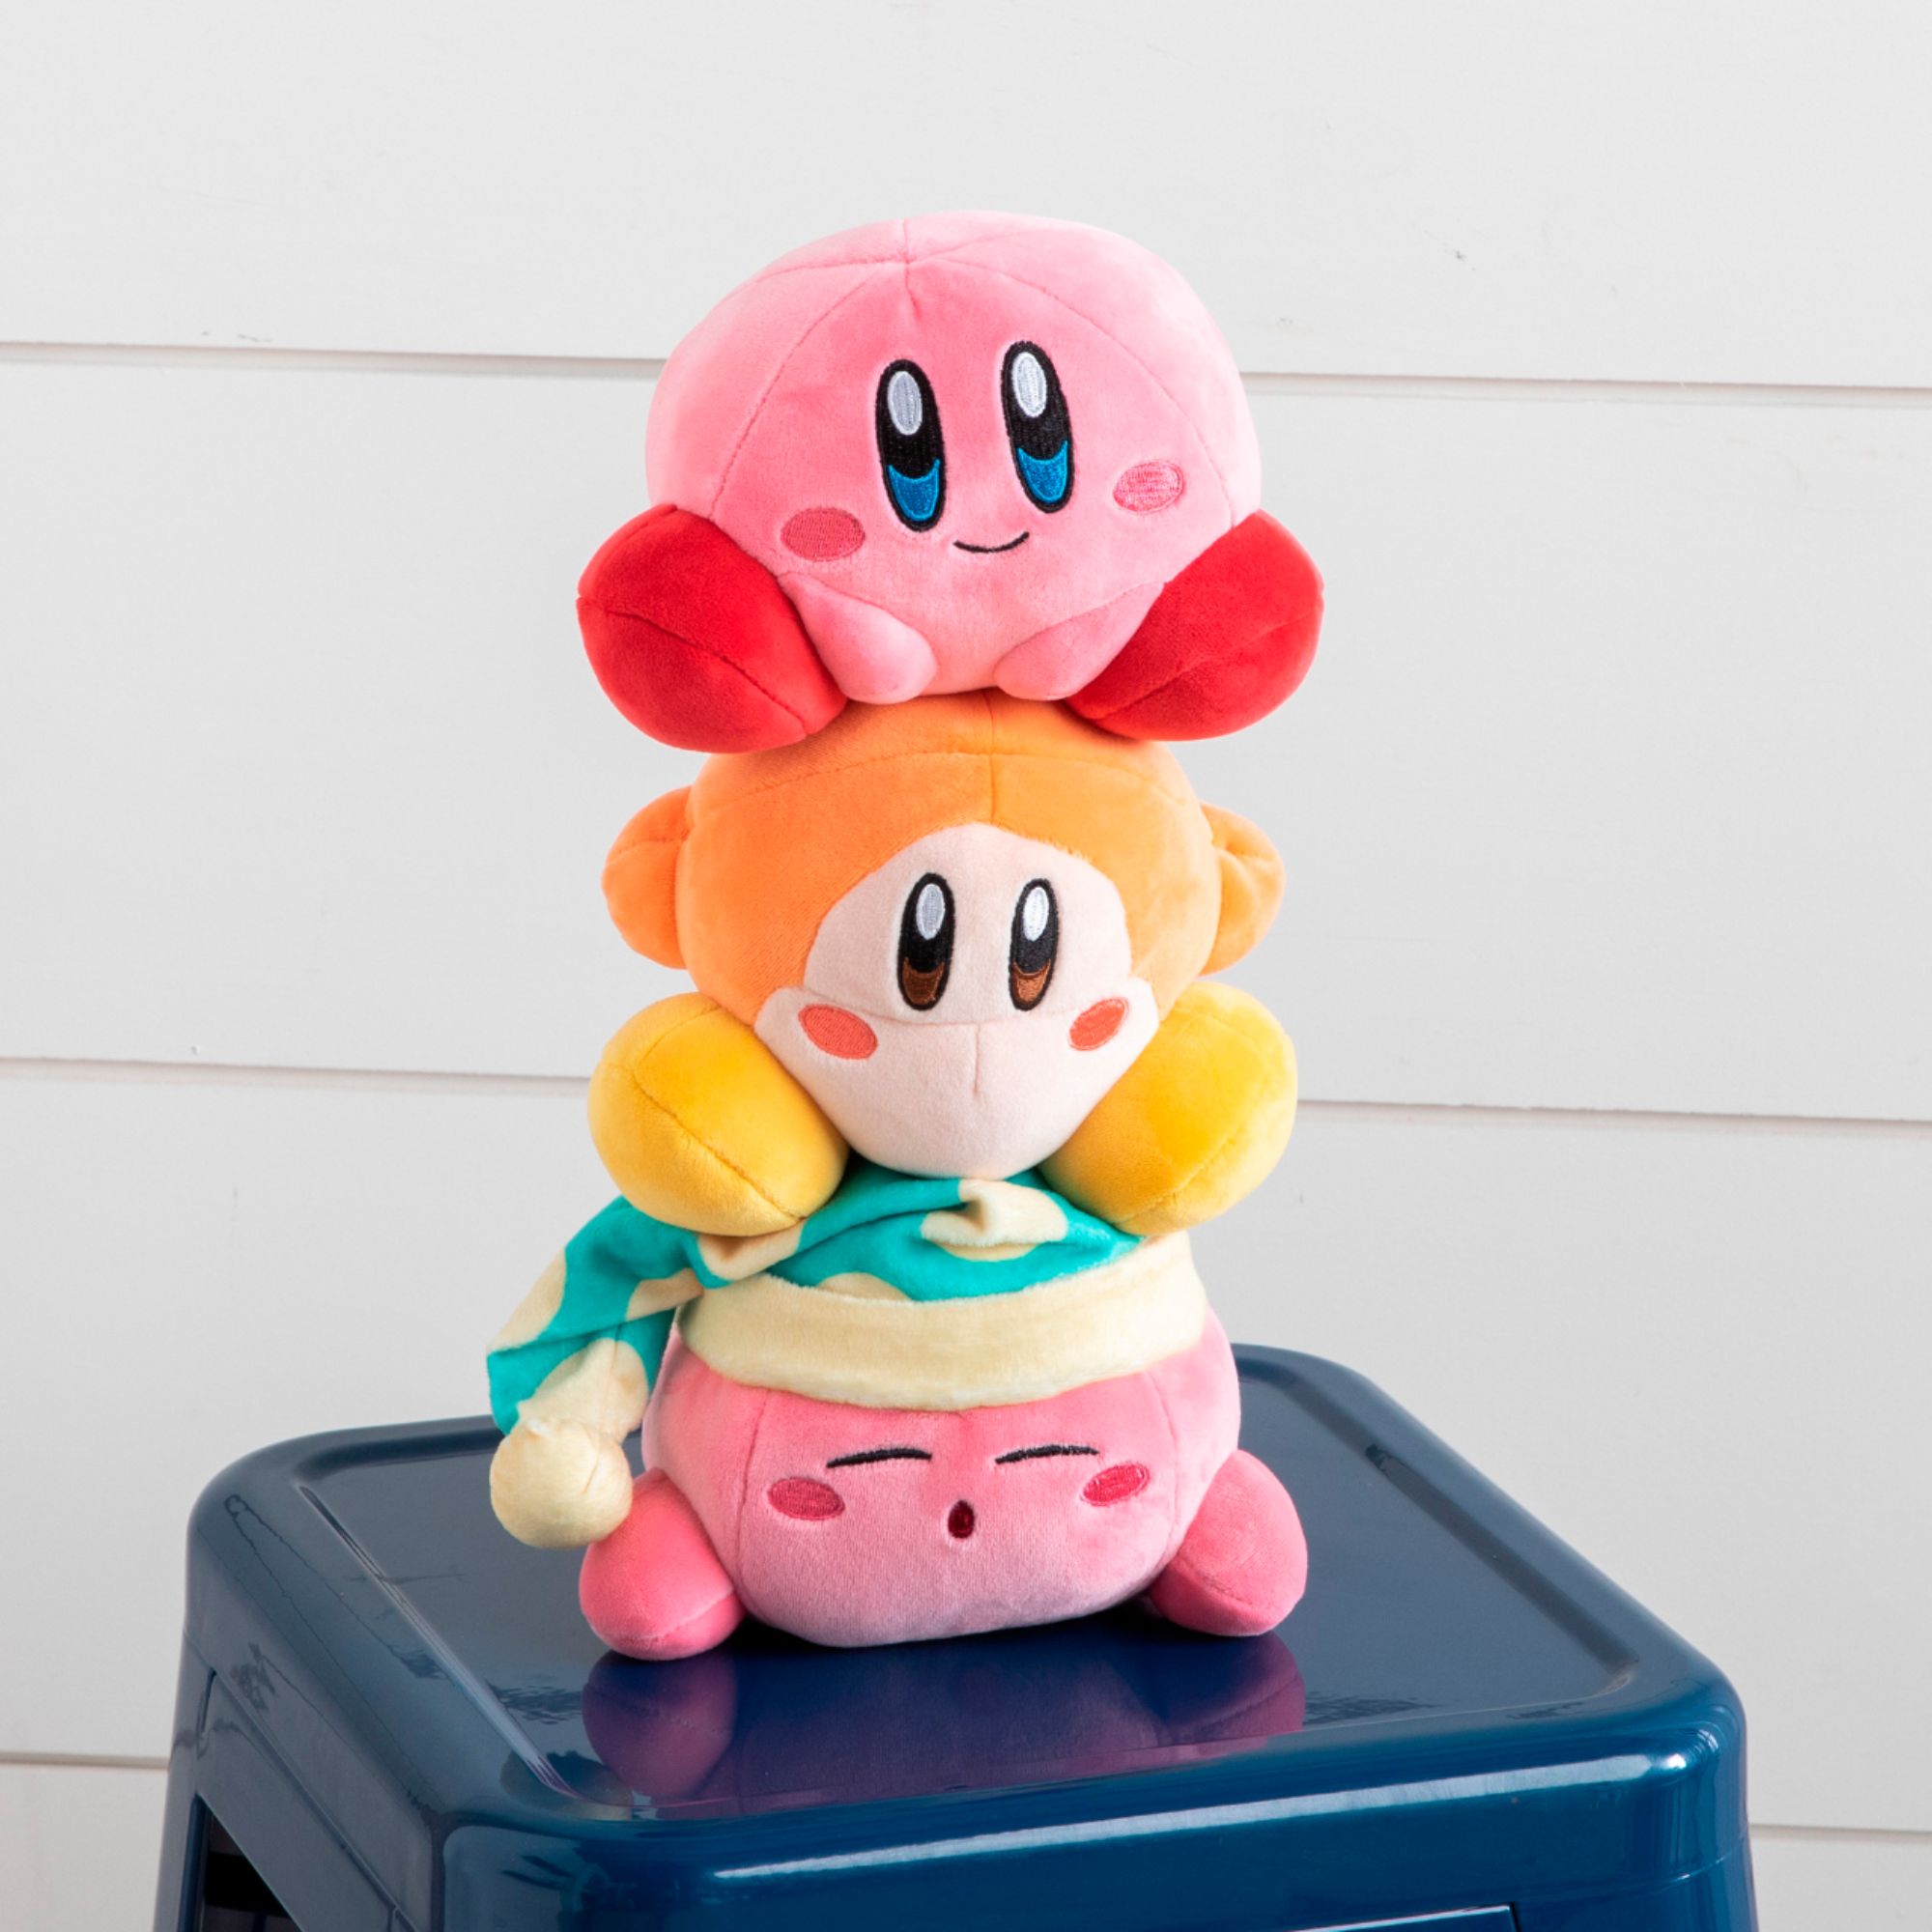 Kirby SquishMe Foam Figure Blind Box 90724 - Best Buy